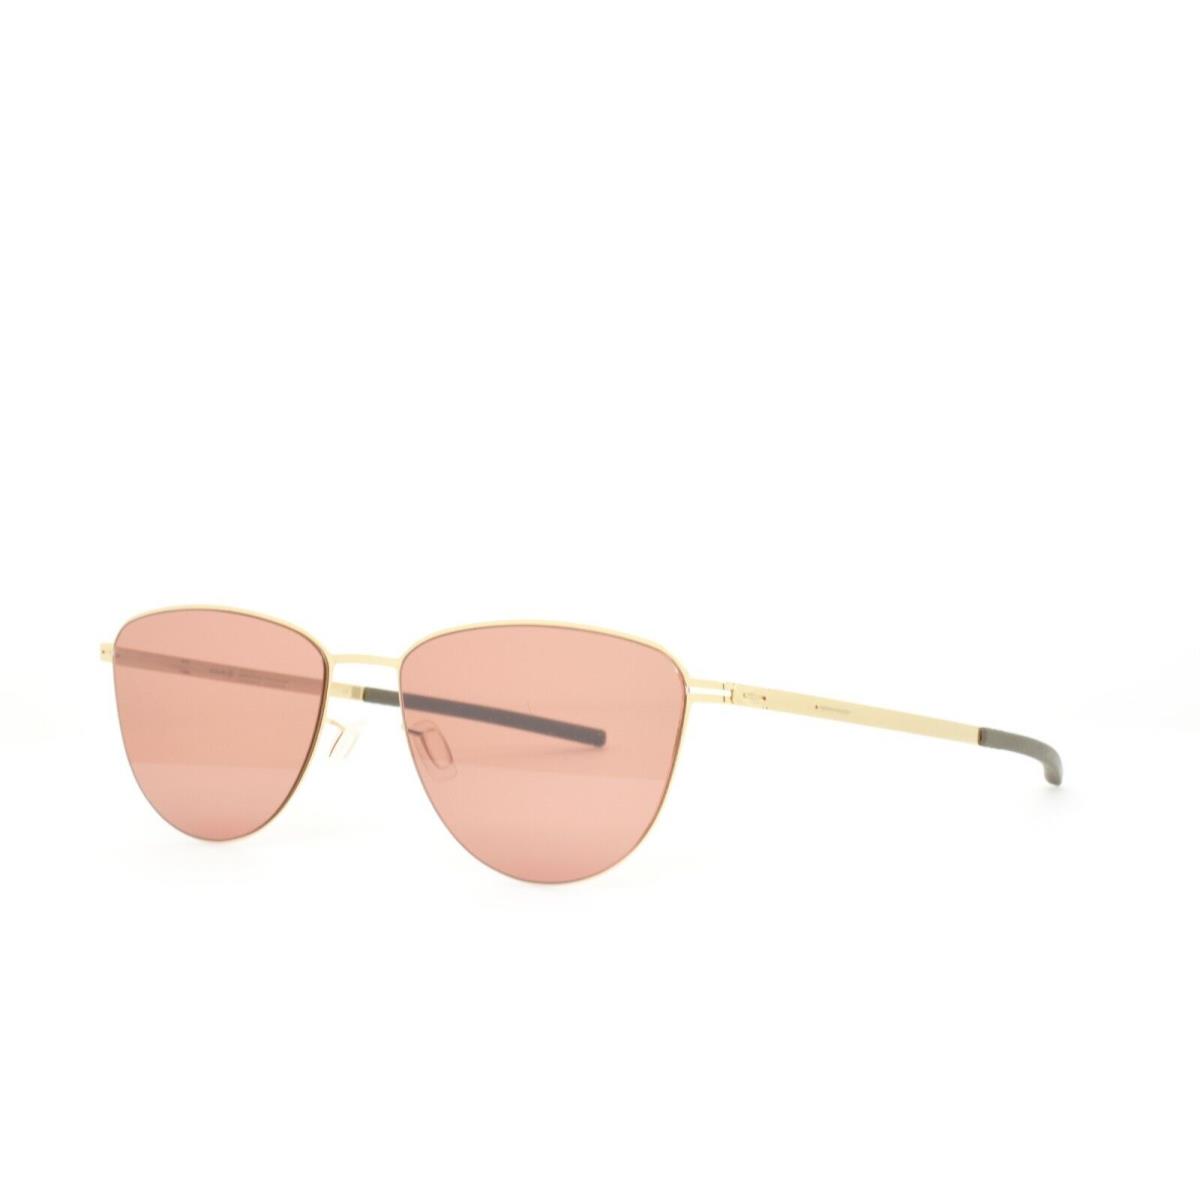 iC Berlin Sunglasses Pali Rose Gold 55-16-145